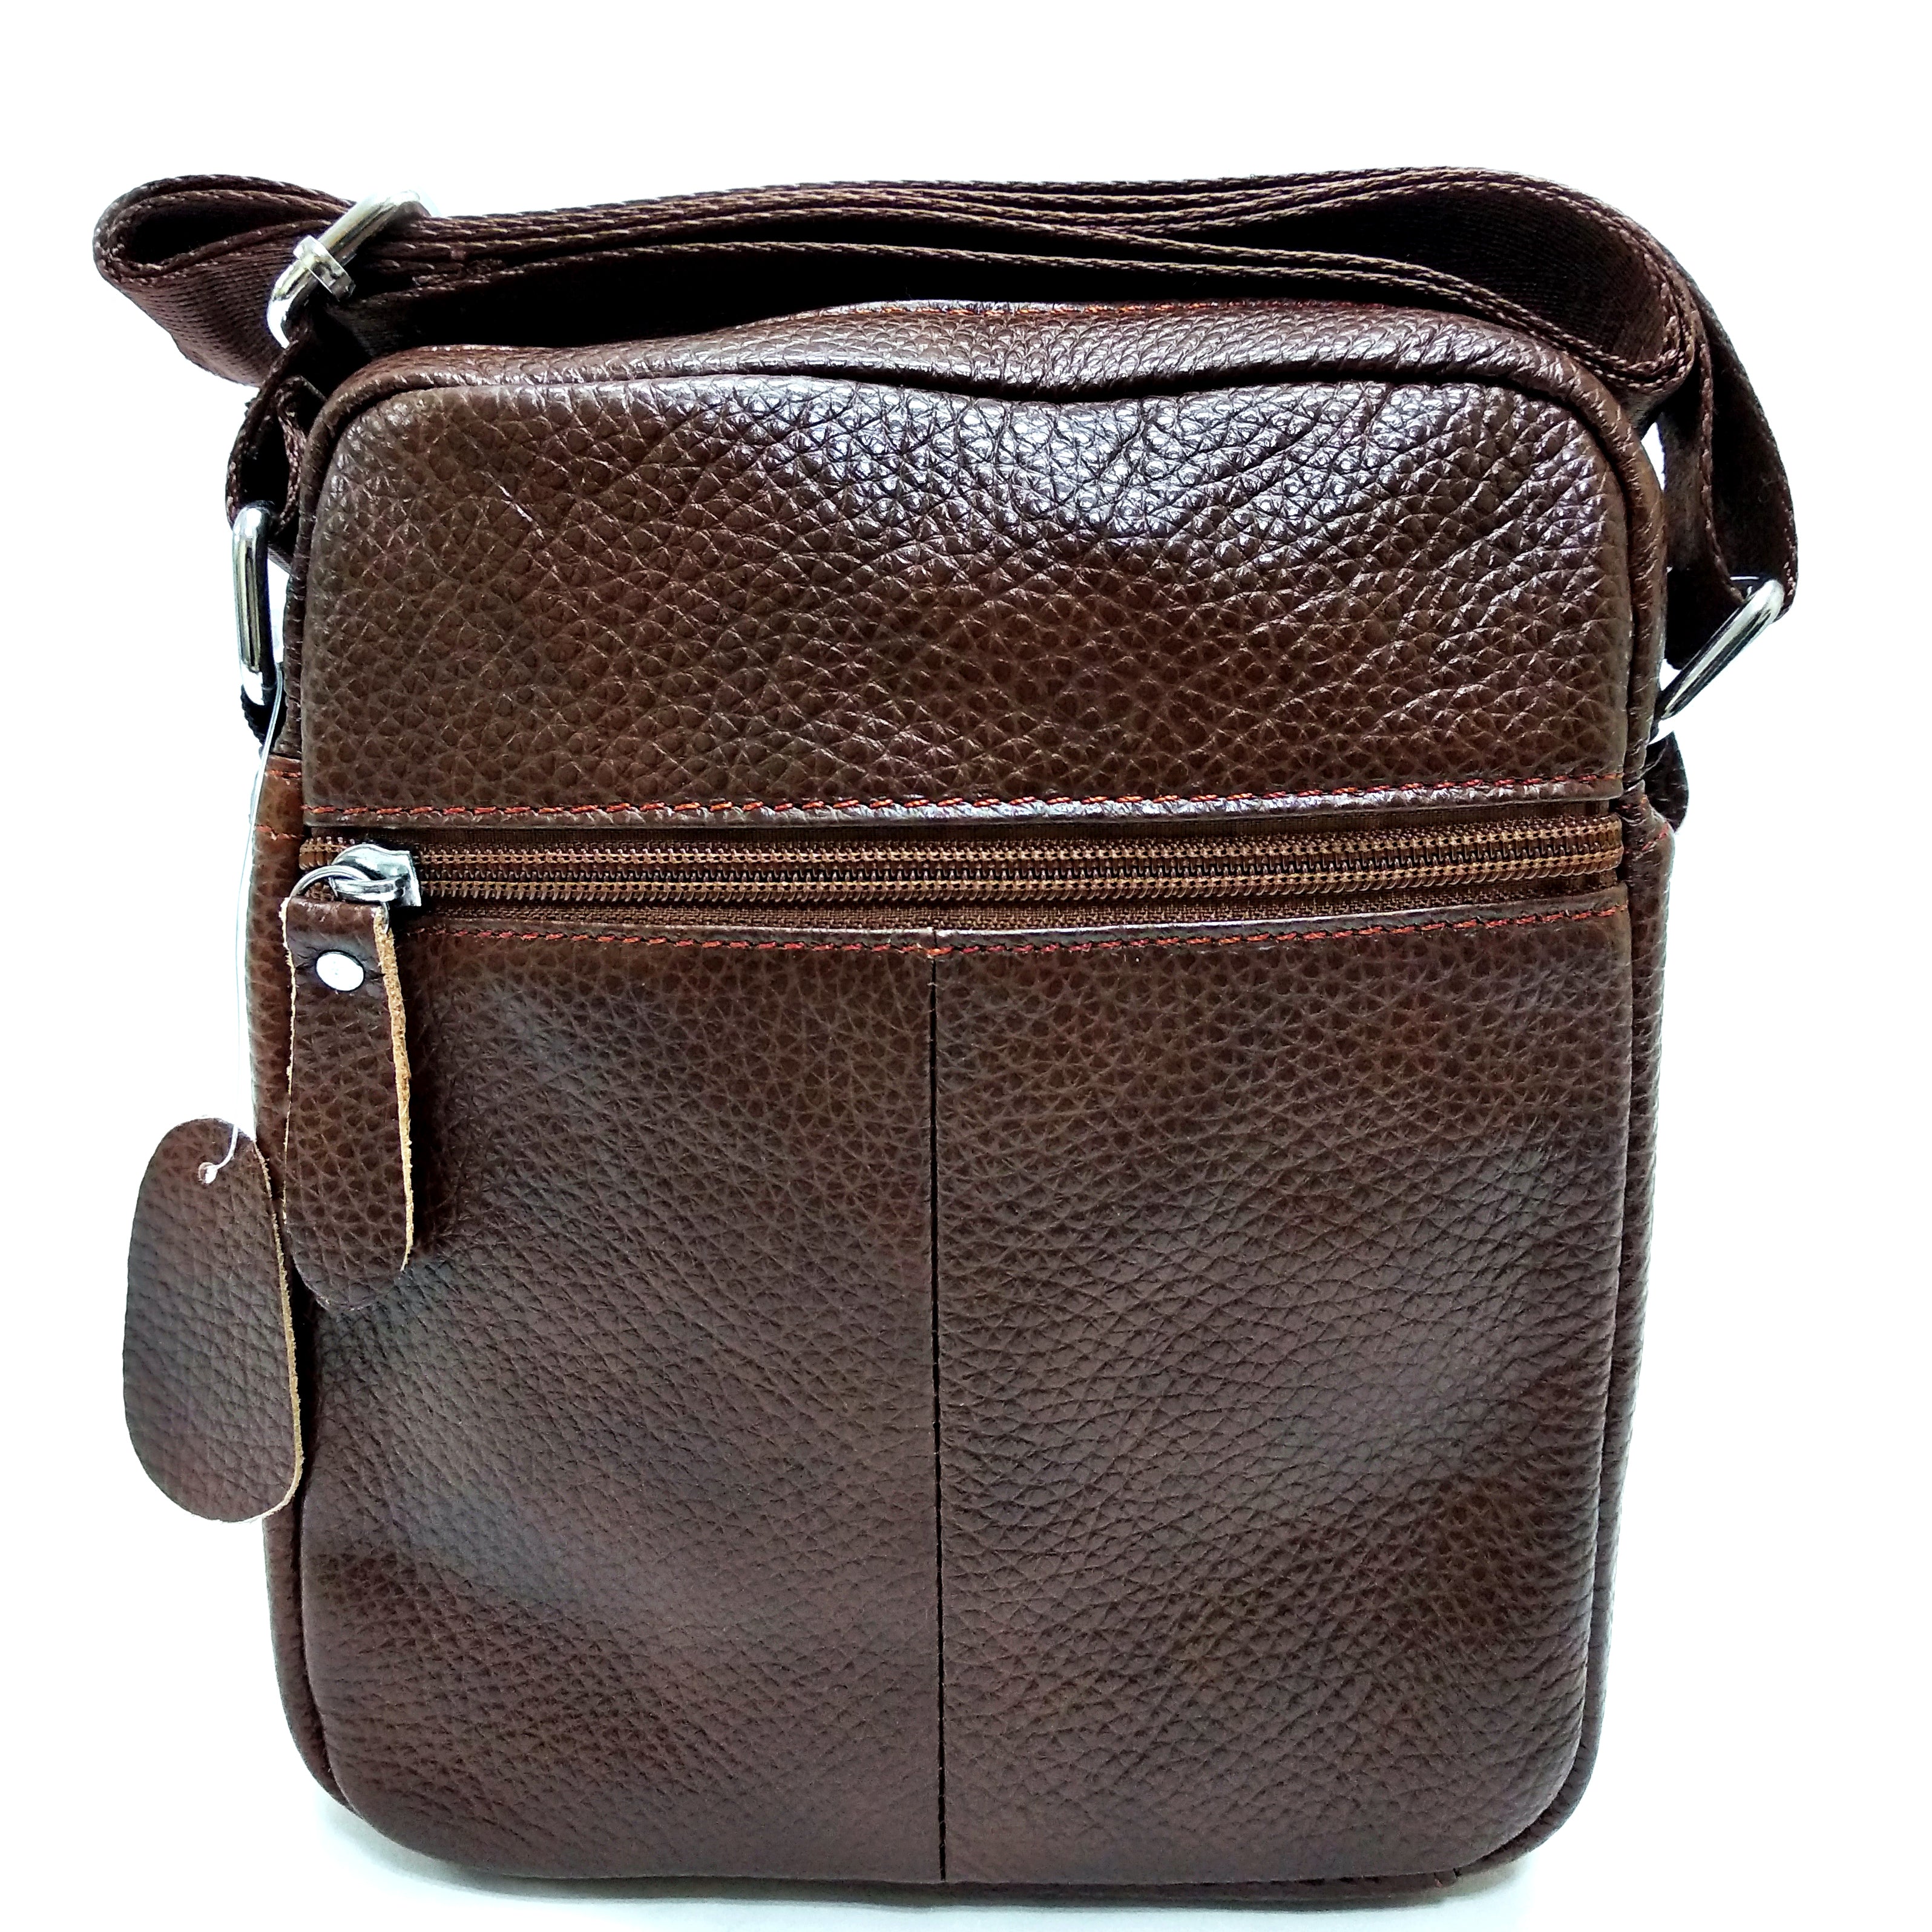 Brown Leather shoulder bag - Fashioraman